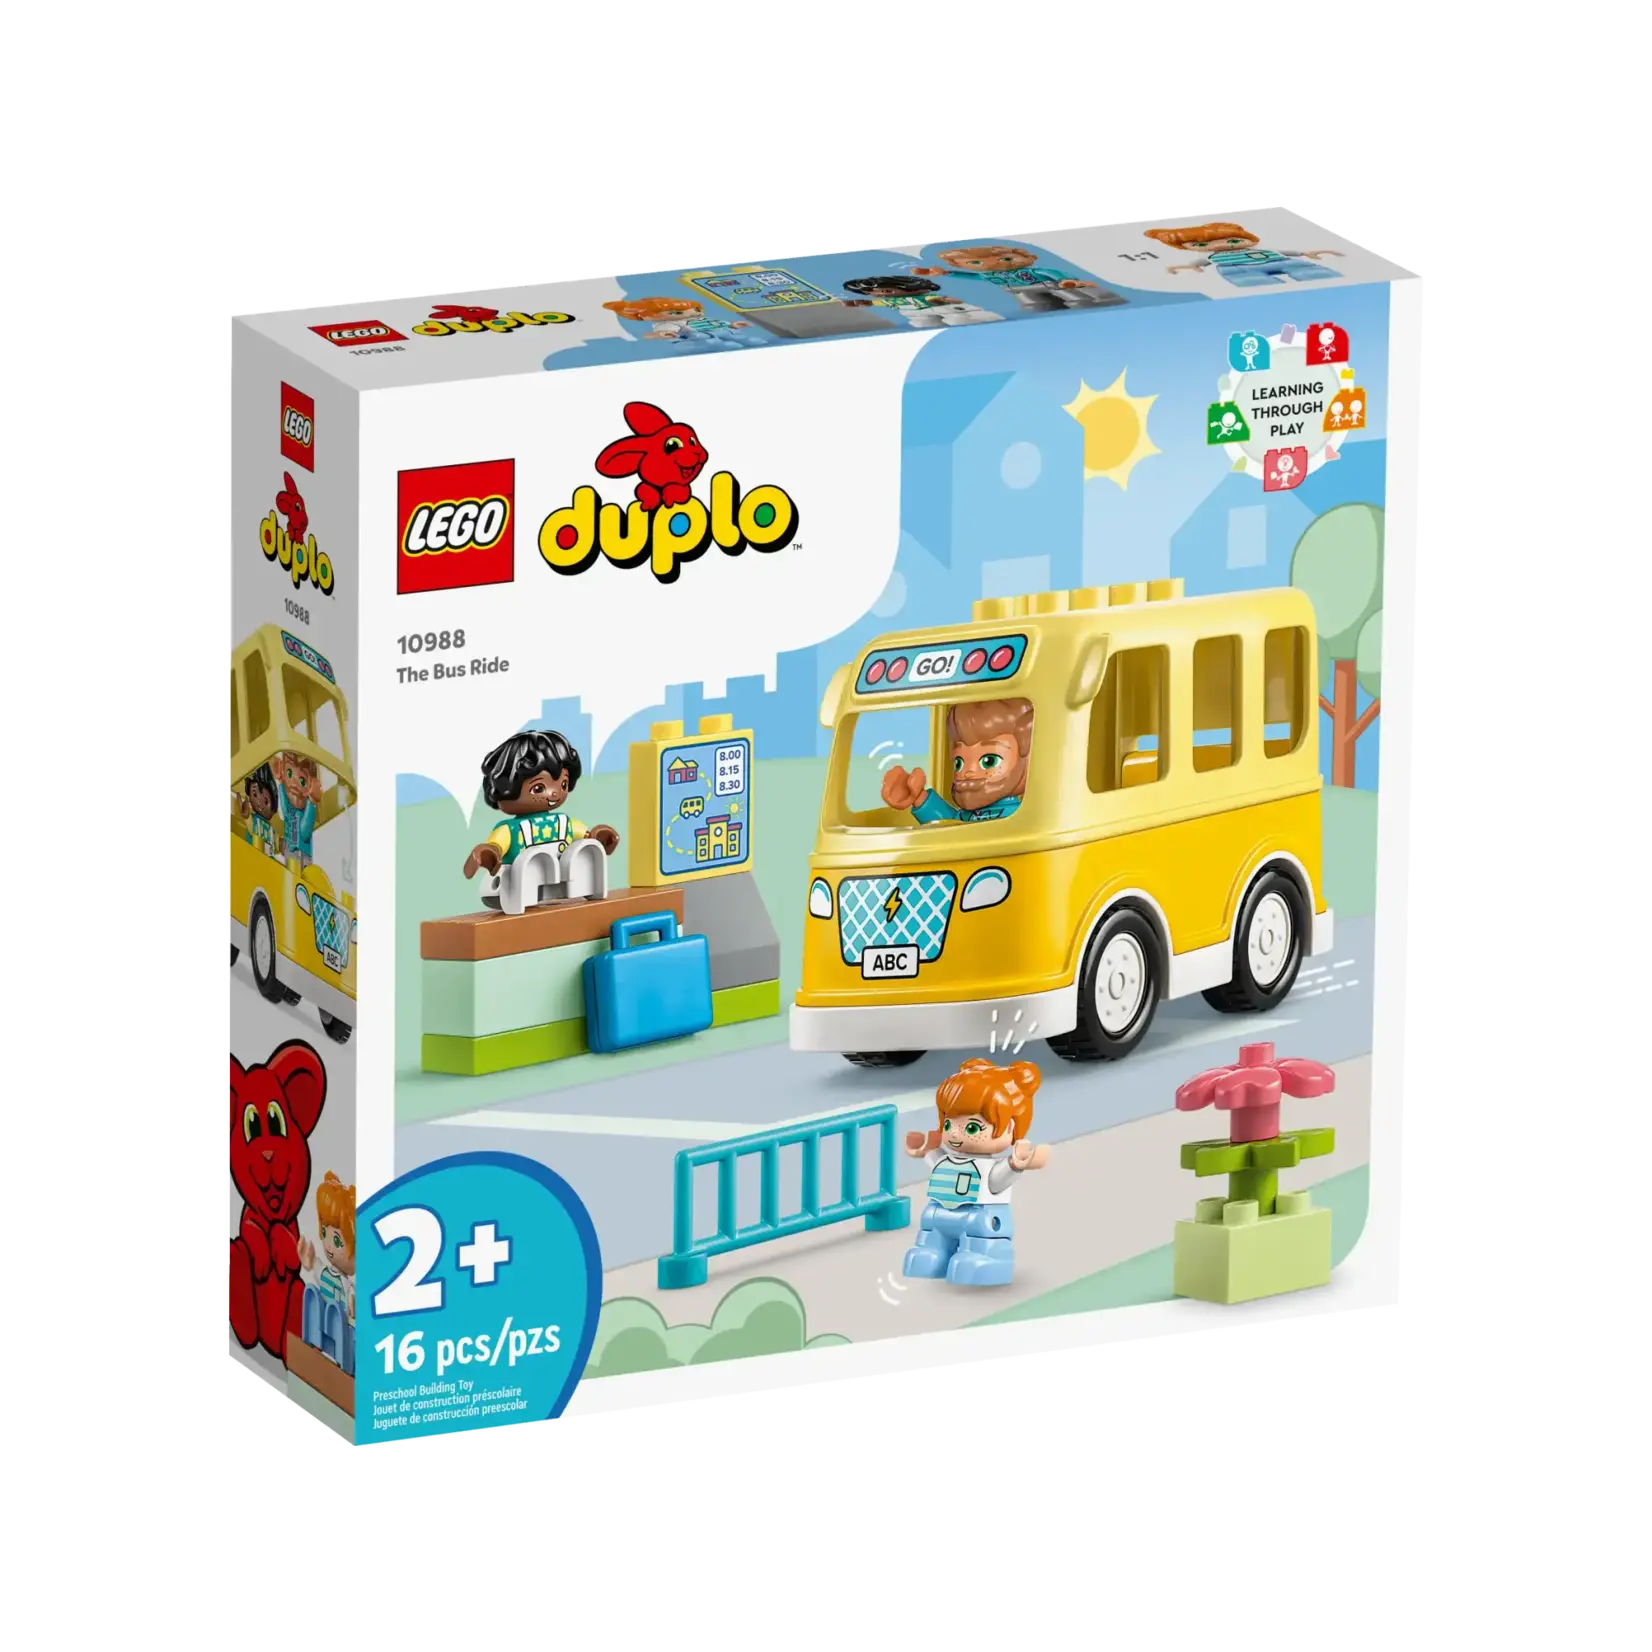 LEGO 10988 DUPLO THE BUS RIDE